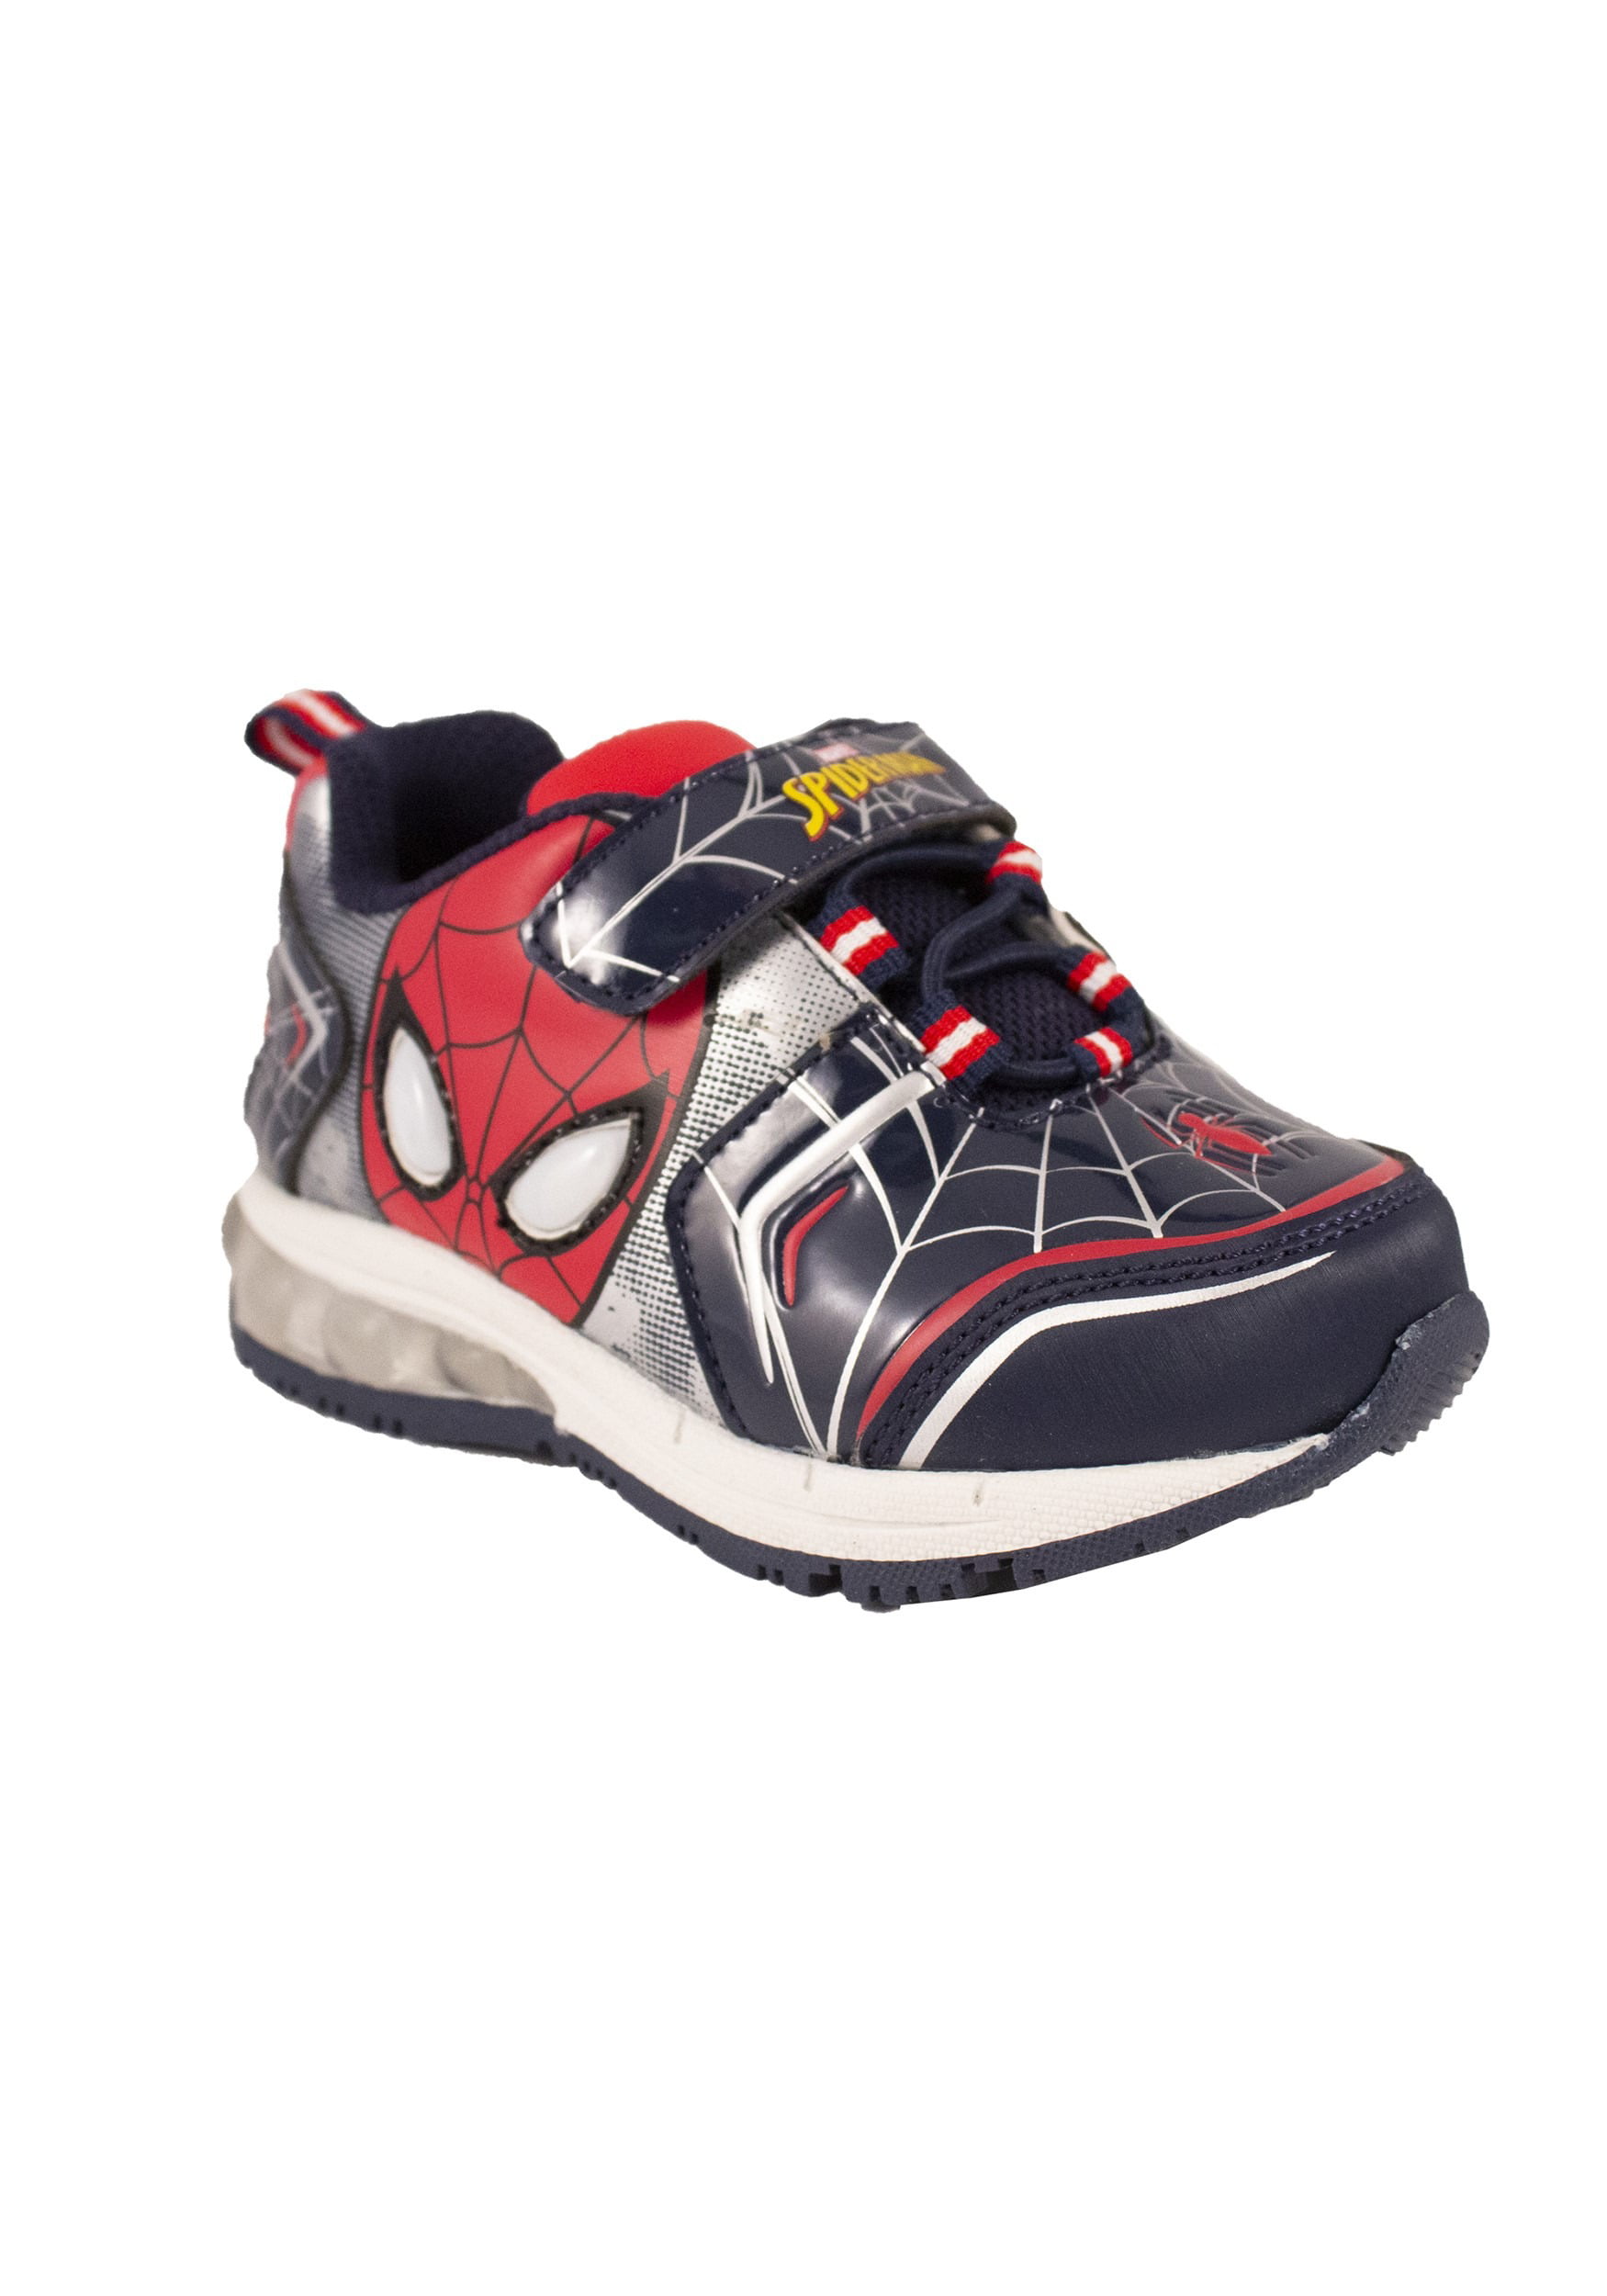 spiderman shoes at walmart